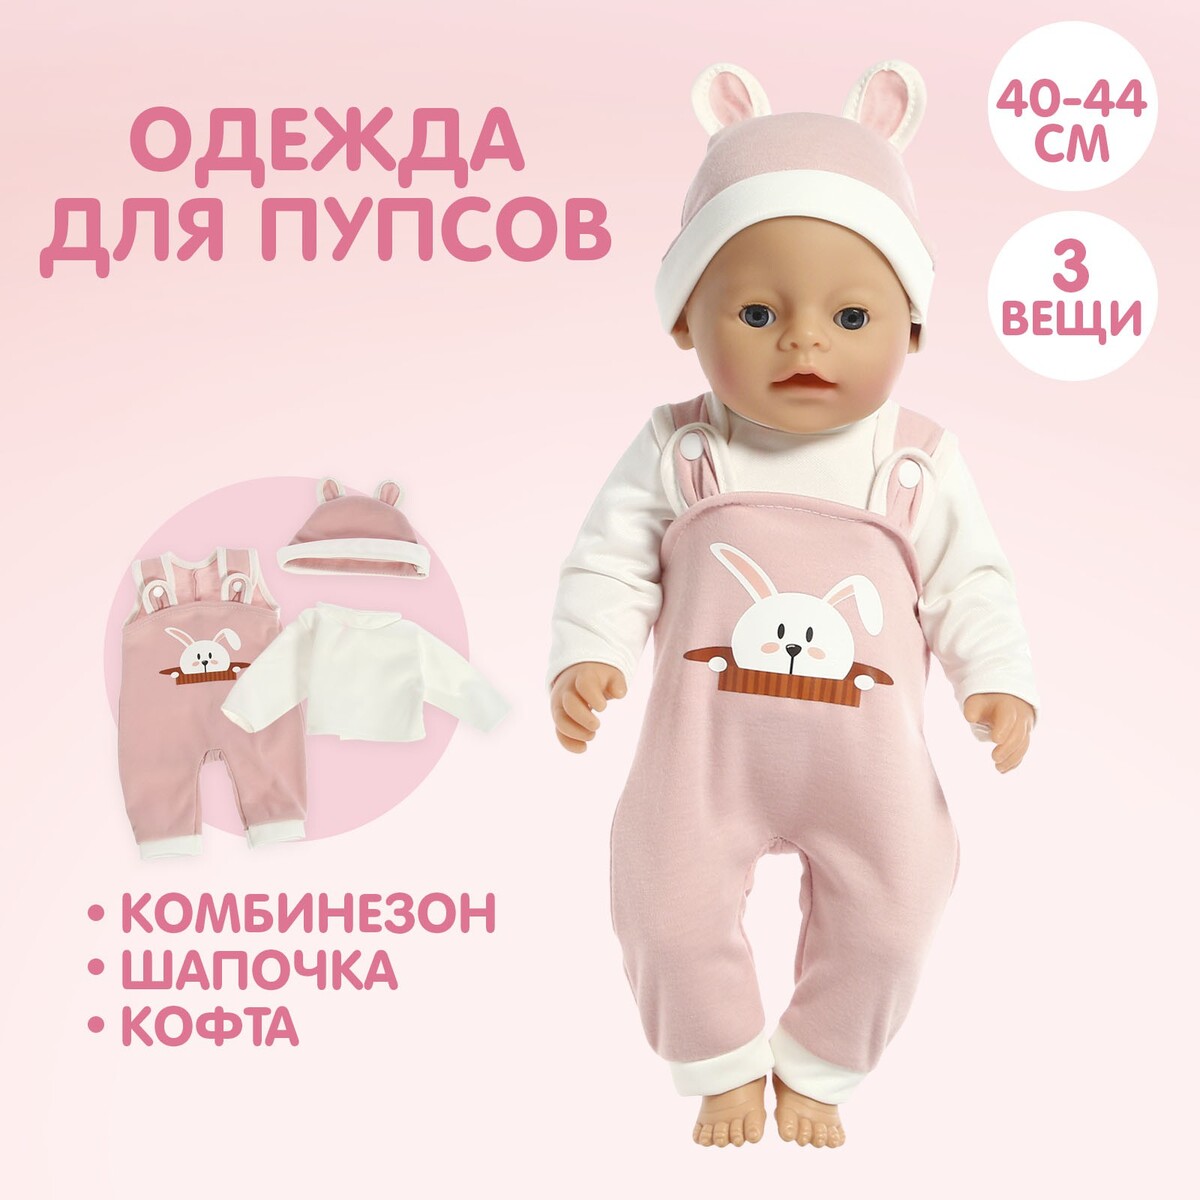 Пижама для кукол 40-44 см, 3 вещи, текстиль, на липучках чувства и вещи